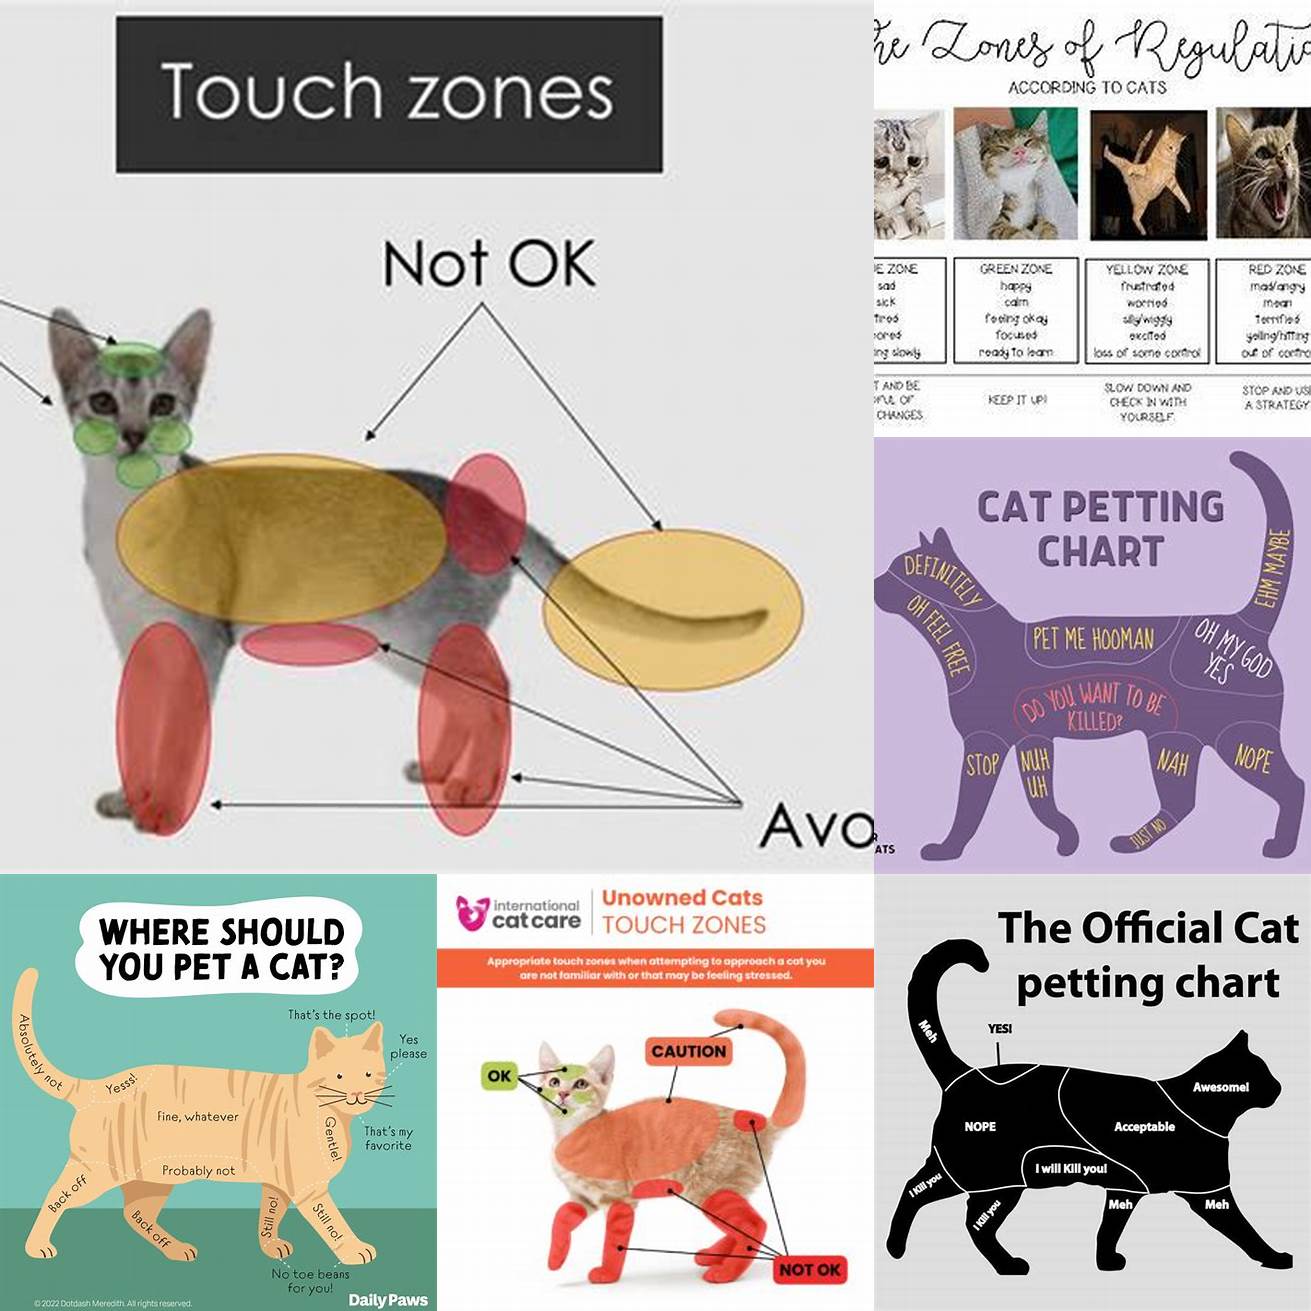 Cat-free zones